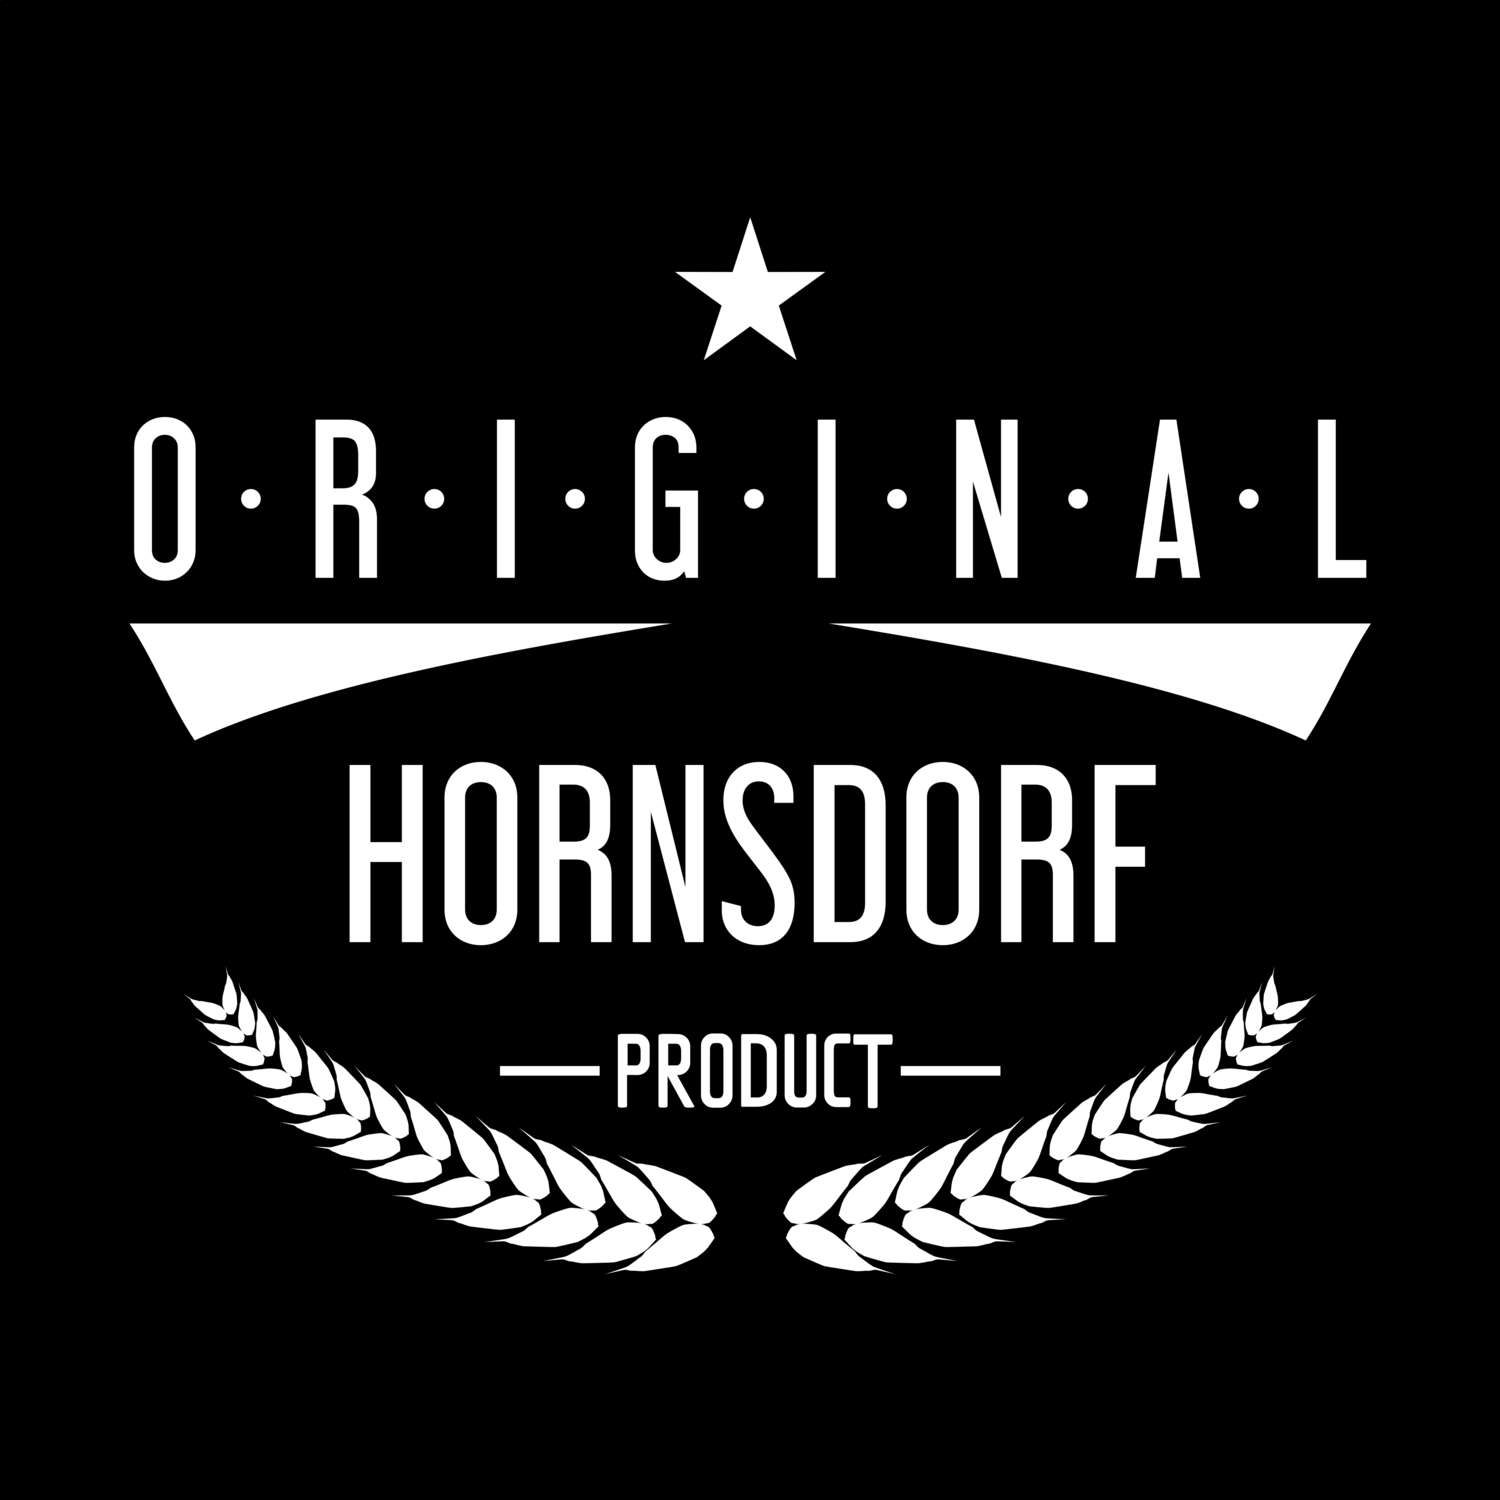 Hornsdorf T-Shirt »Original Product«